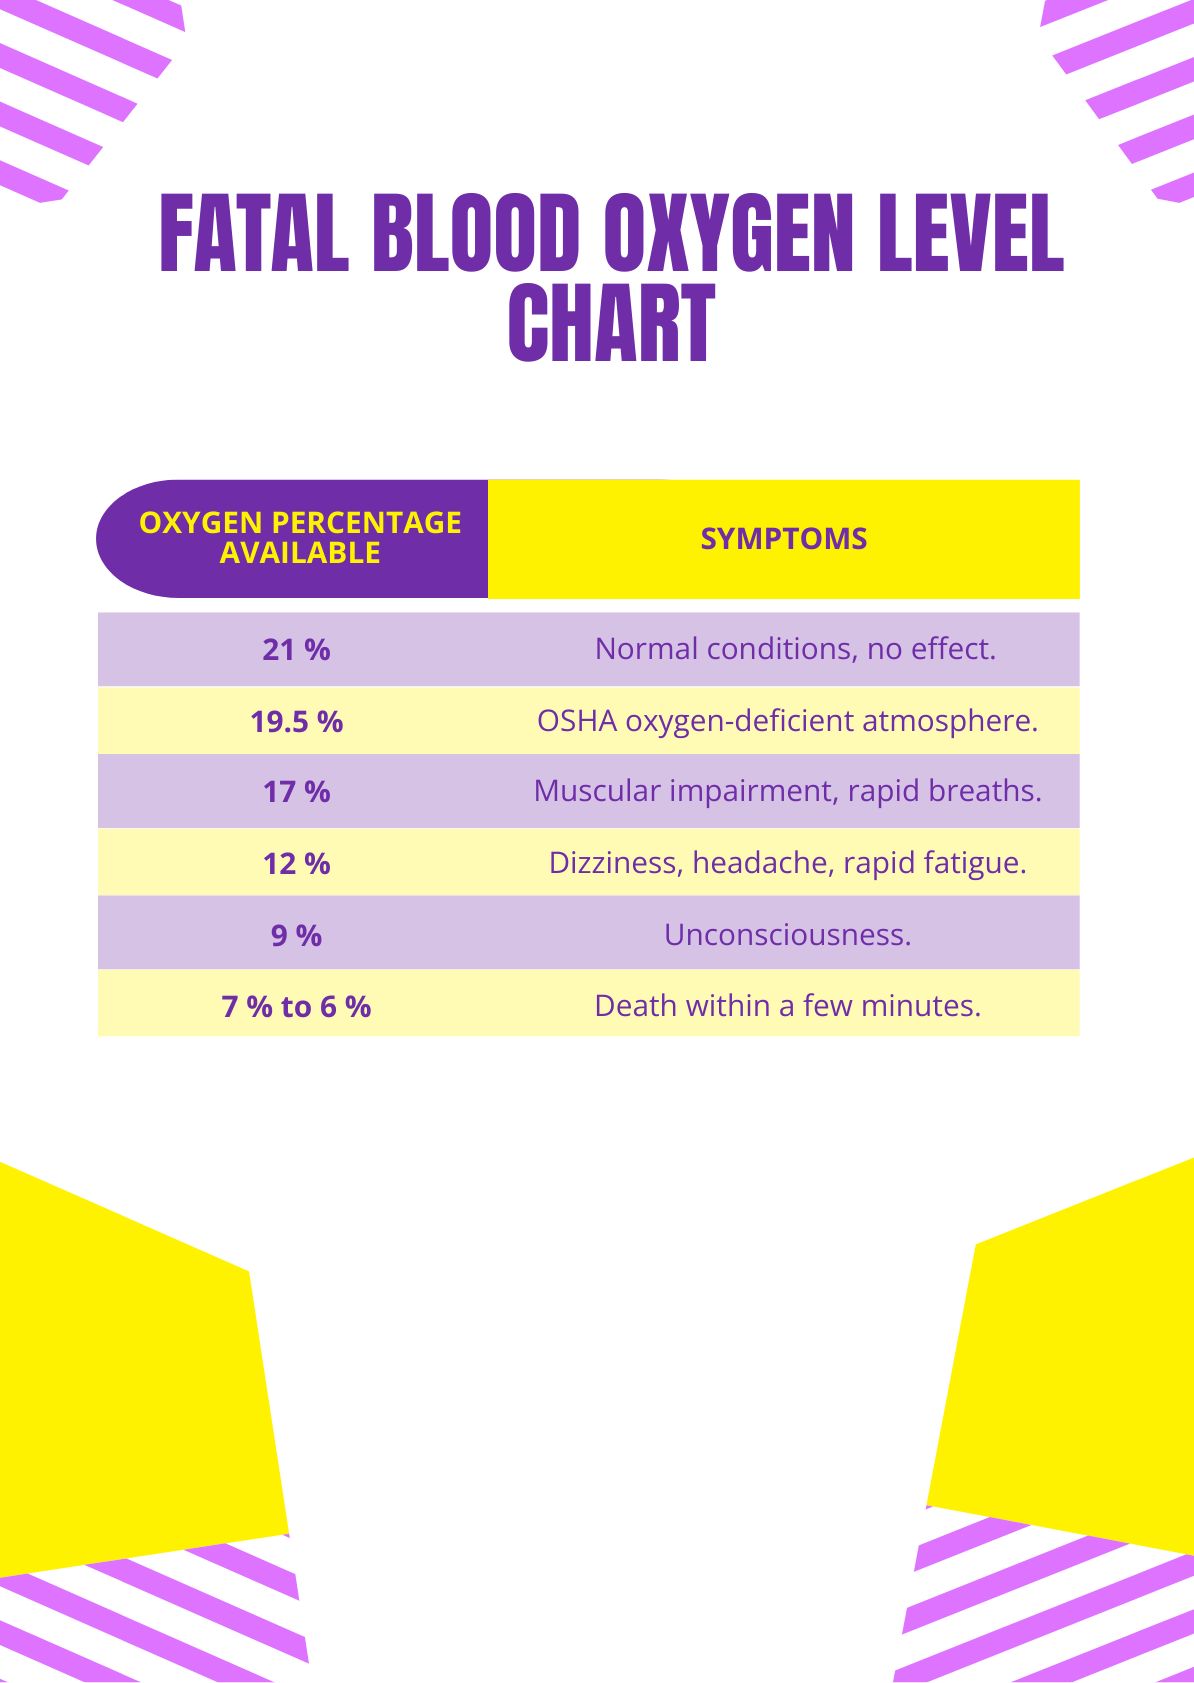 Fatal Blood Oxygen Level Chart in PDF, Illustrator